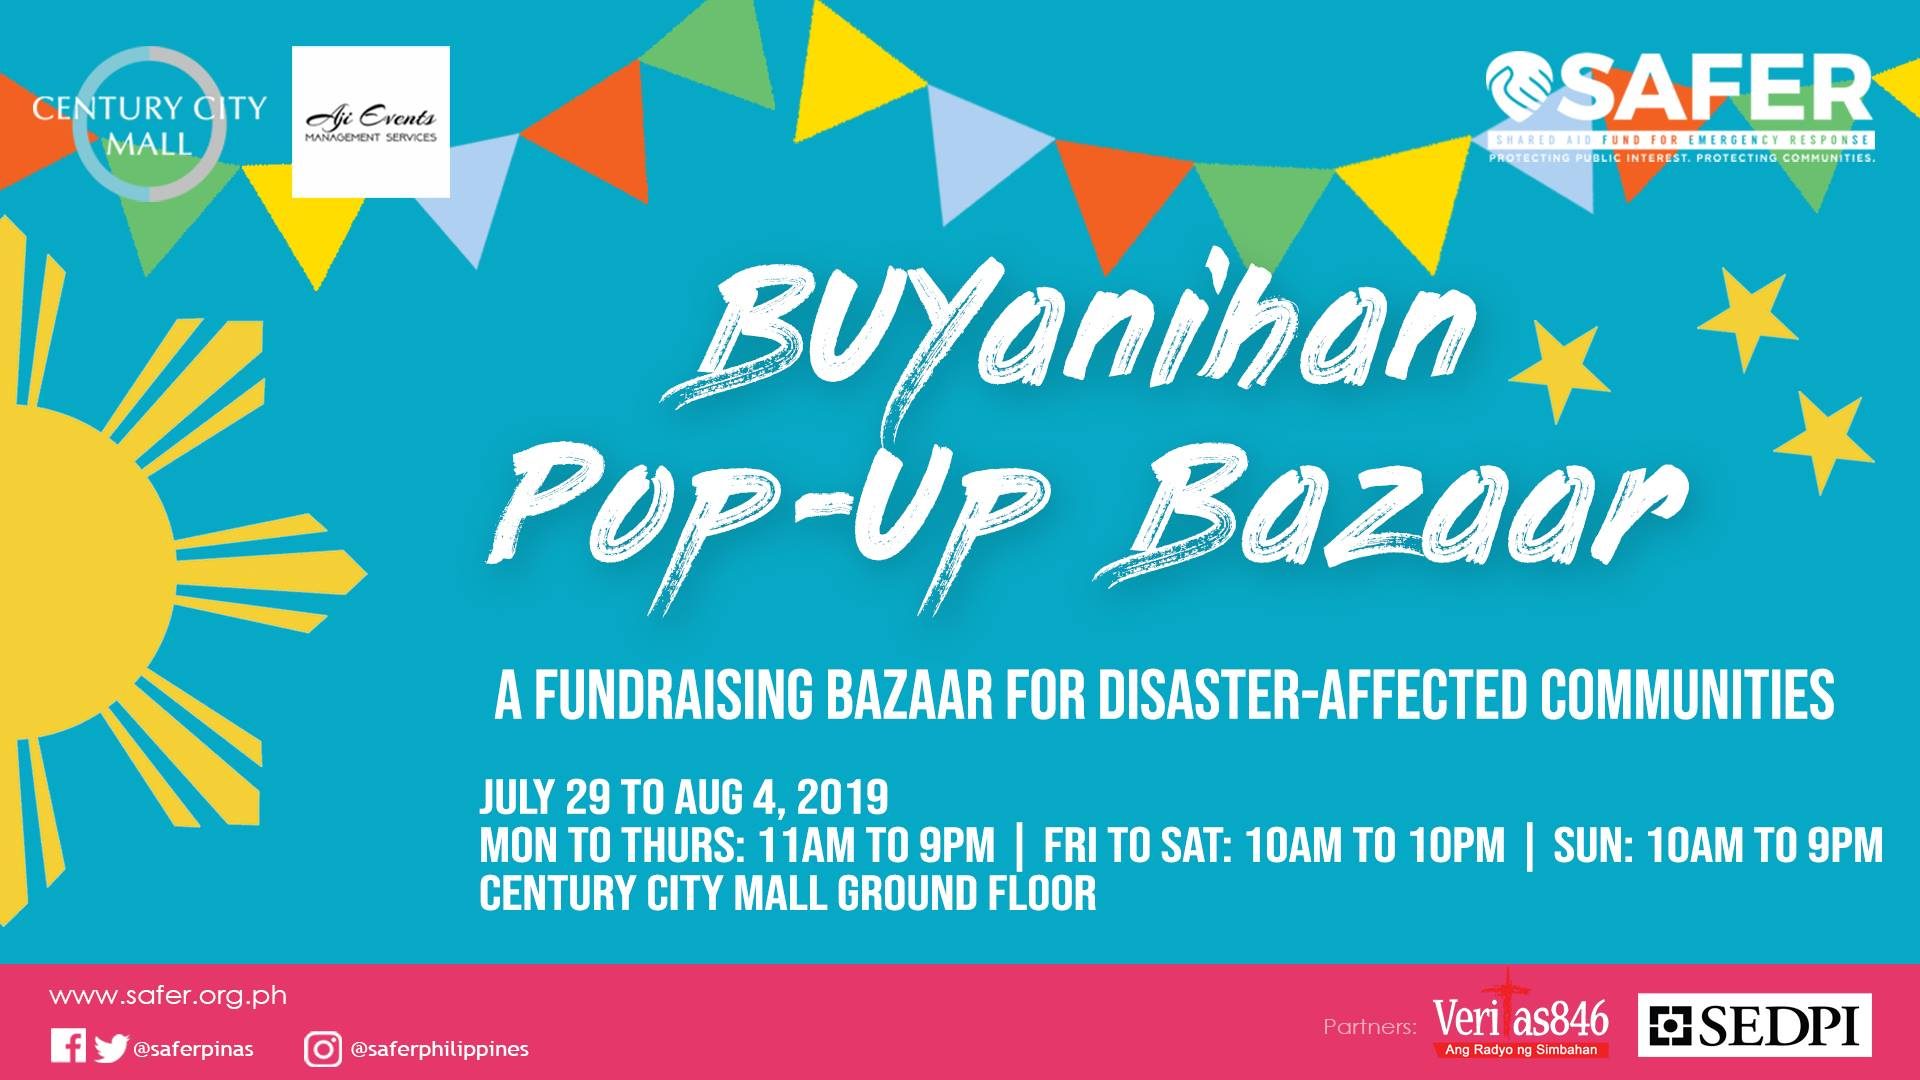 SAFER Foundation brings back BUYanihan fundraiser bazaar